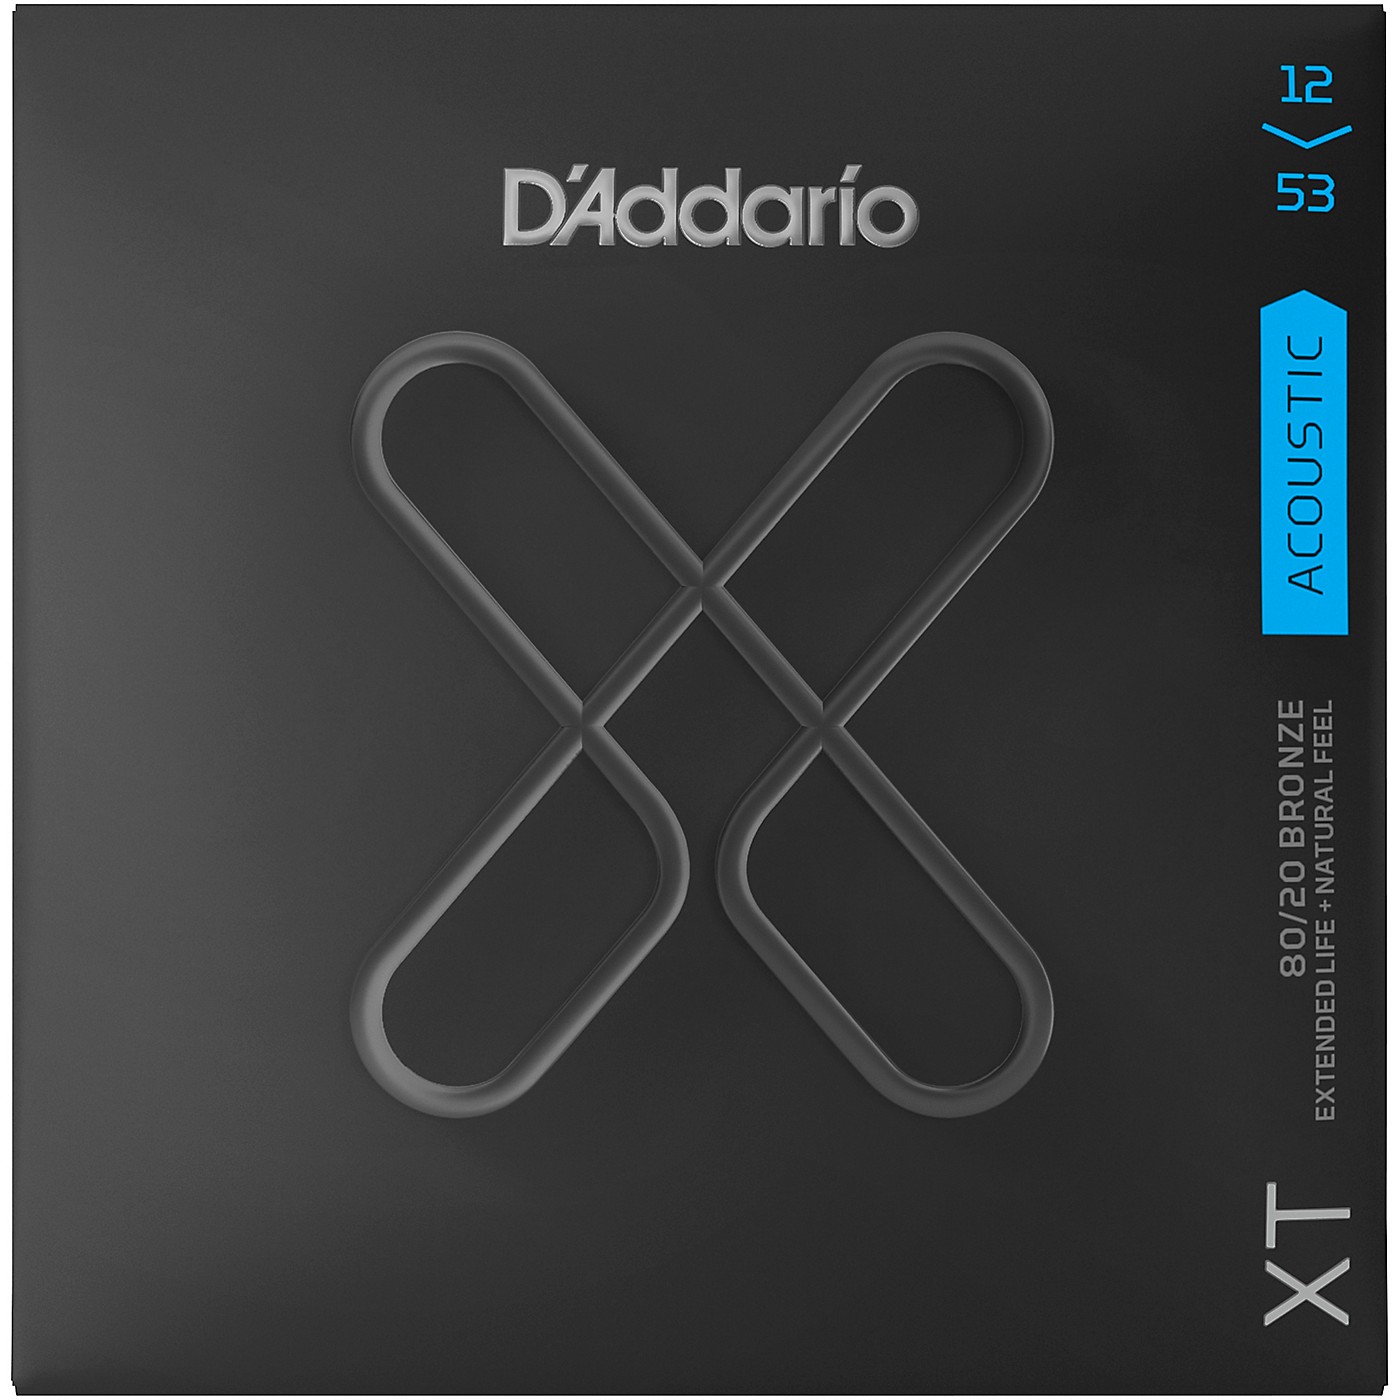 D'Addario XT Acoustic Strings, Light, 12-53 thumbnail